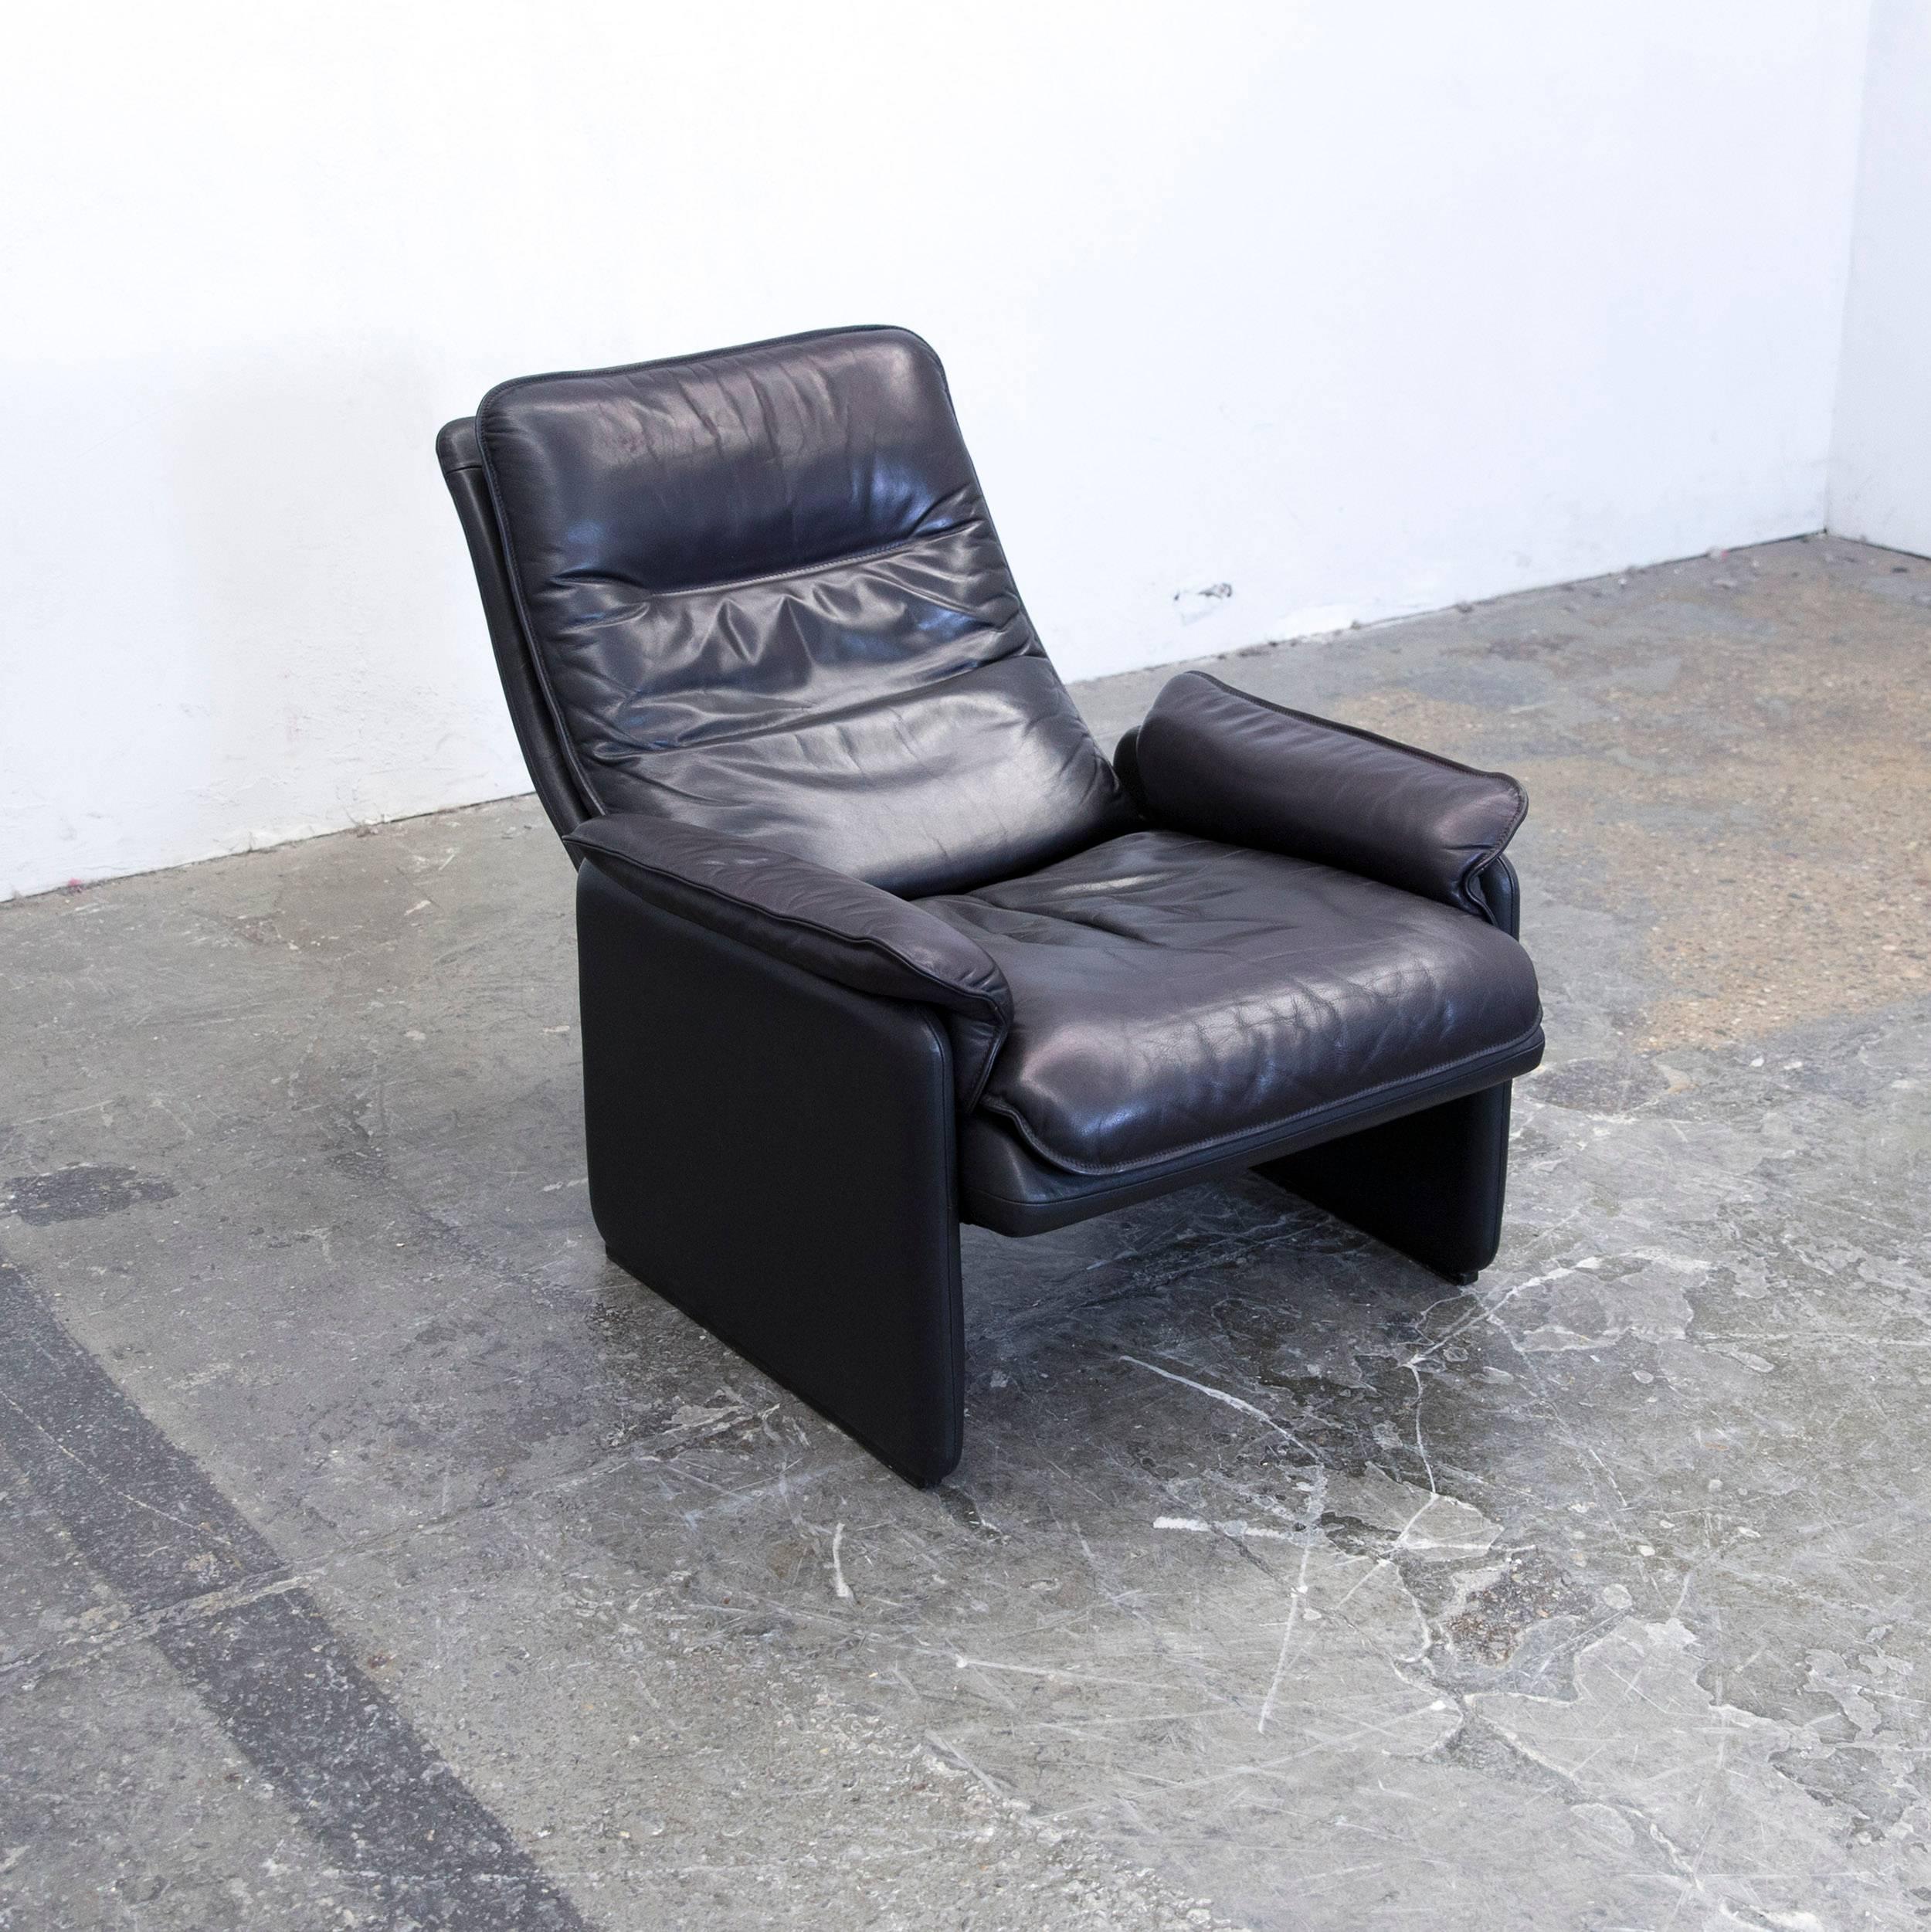 German De Sede Designer Armchair Leather Aubergine Black Oneseater Couch, Modern